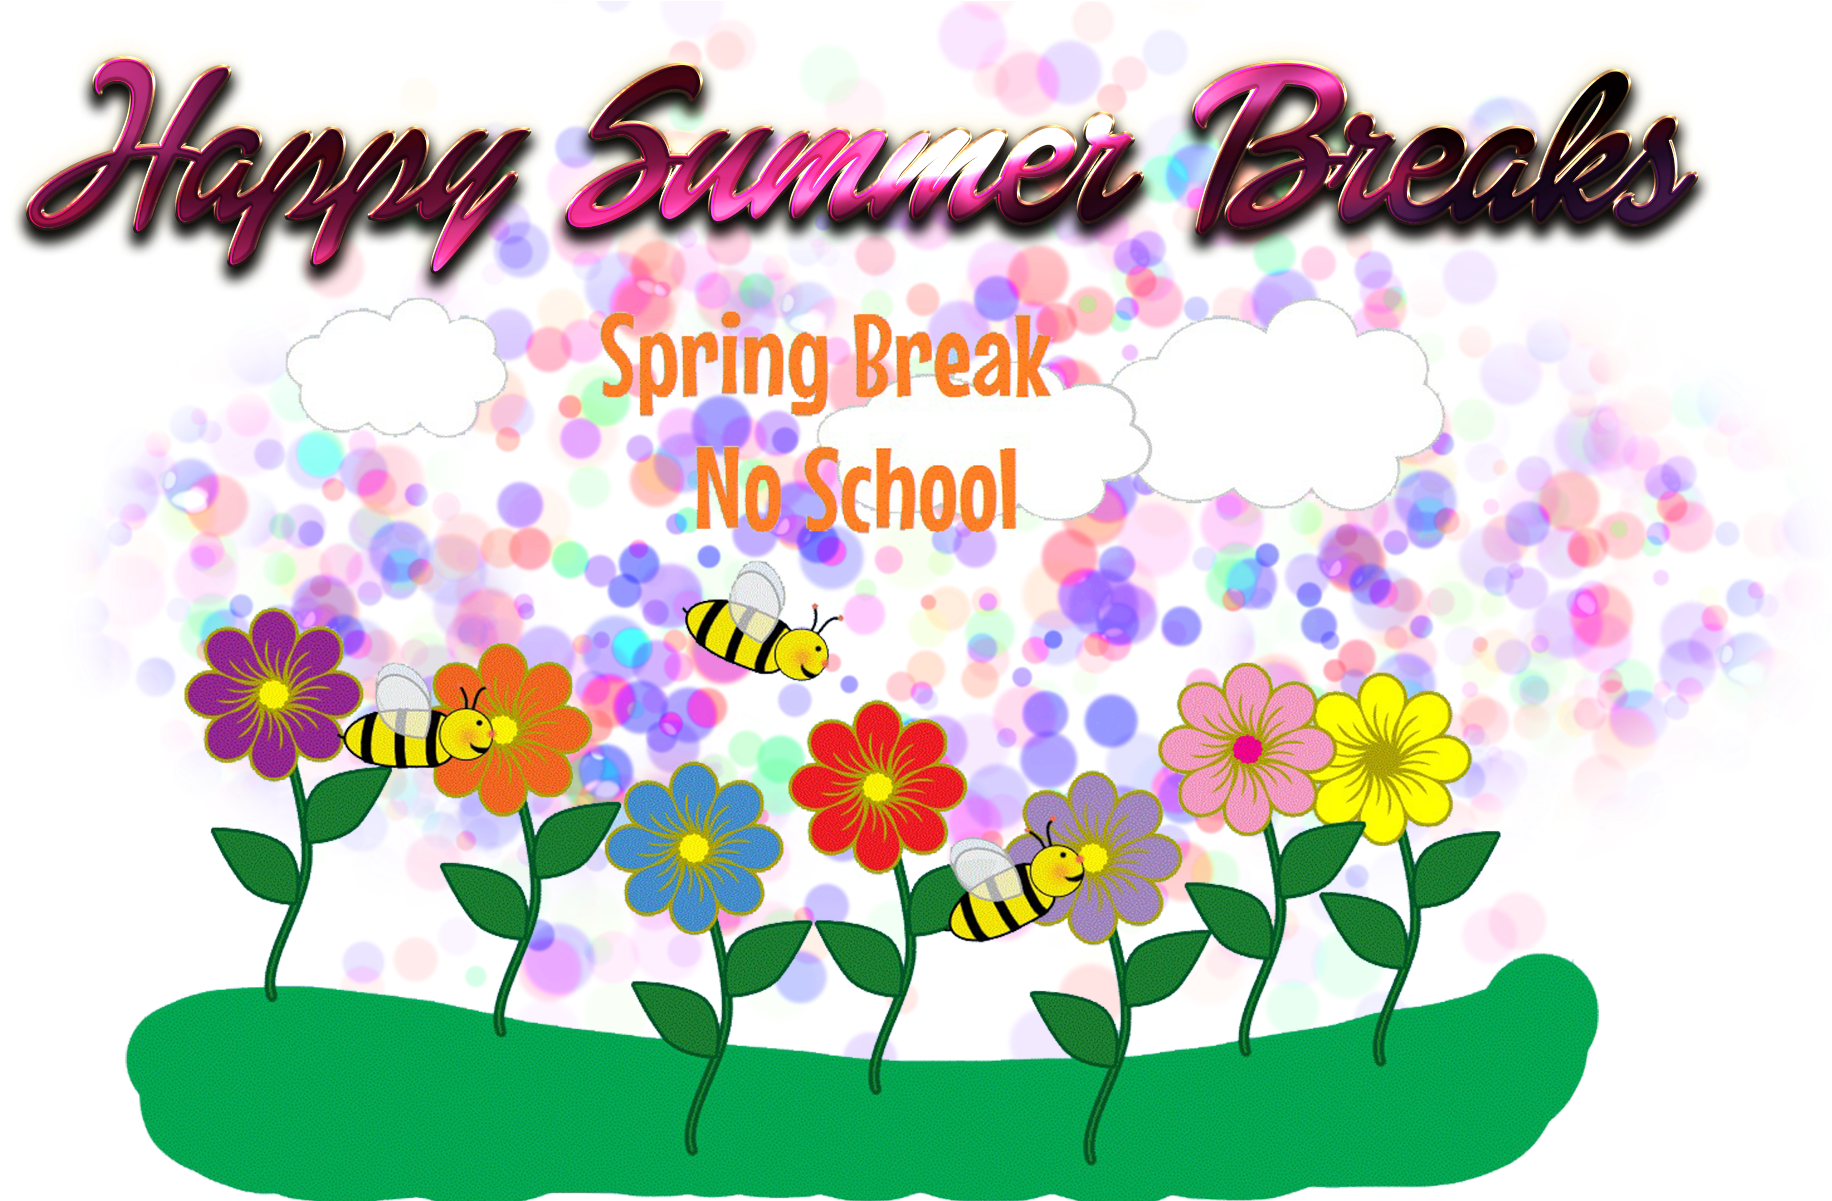 Happy Summer Spring Break Graphic PNG